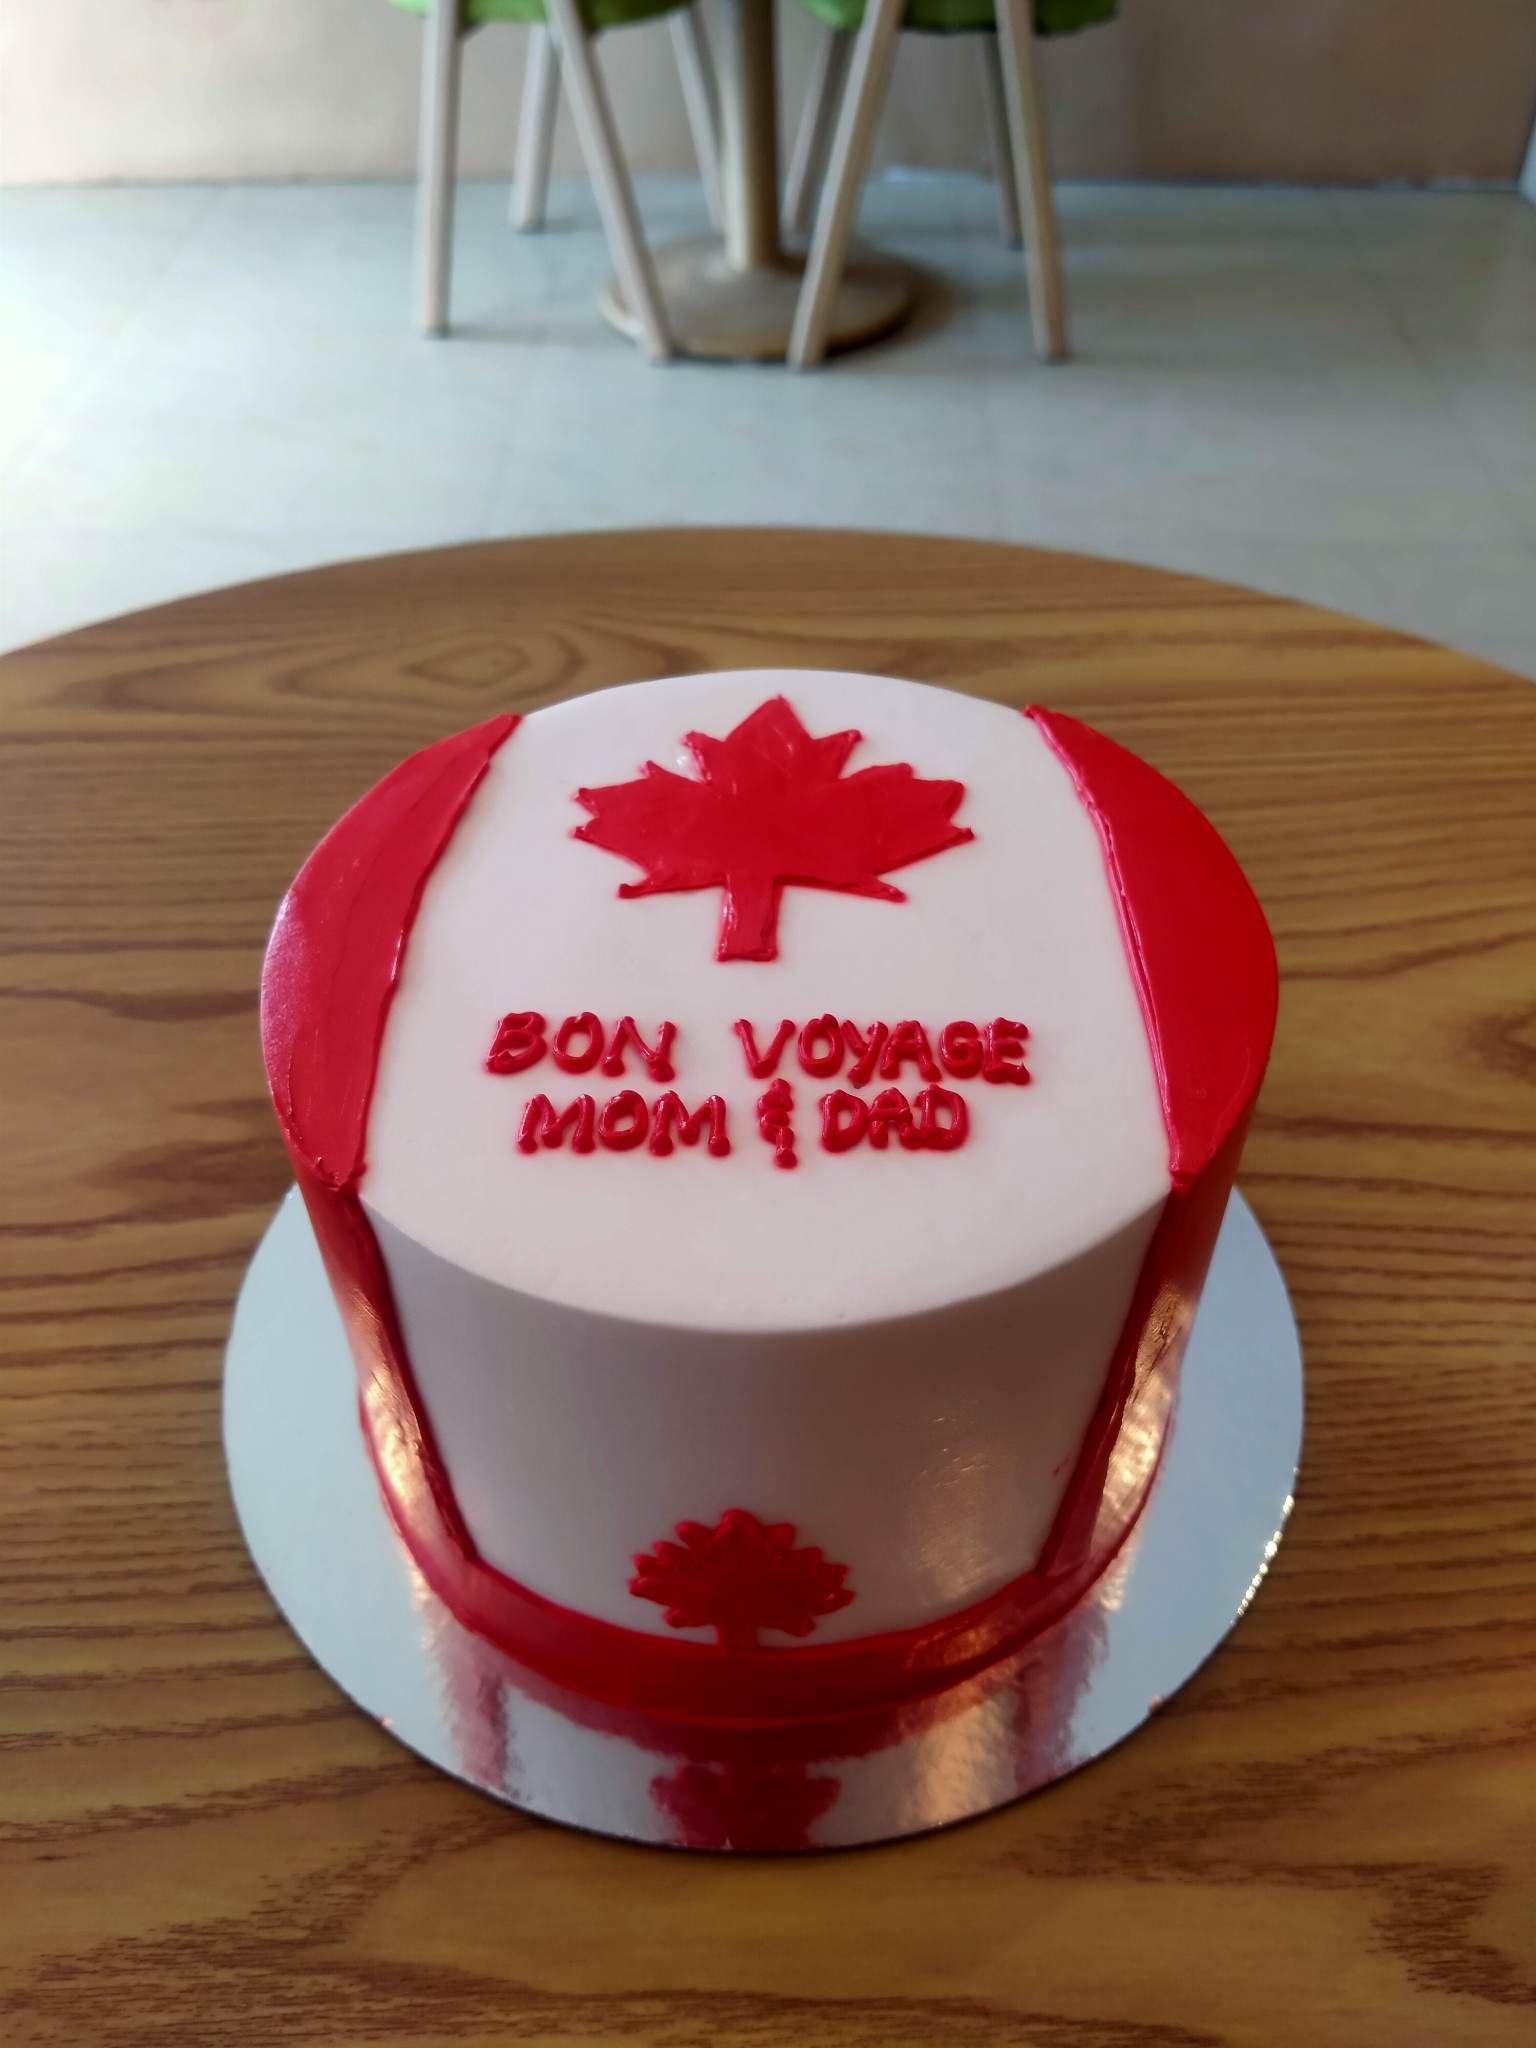 Cakes n Creams Mohali - Bon voyage theme cake #bonvoyage #aeroplane  #aircanada #canadaflag #clouds #customisedcakes #cakebakeoffng  #chandigarhbakers #mohalibakers #tricitybakers #chandigarh #mohali  #panchkula #tricity #chandigarhfoodlover #cakes ...